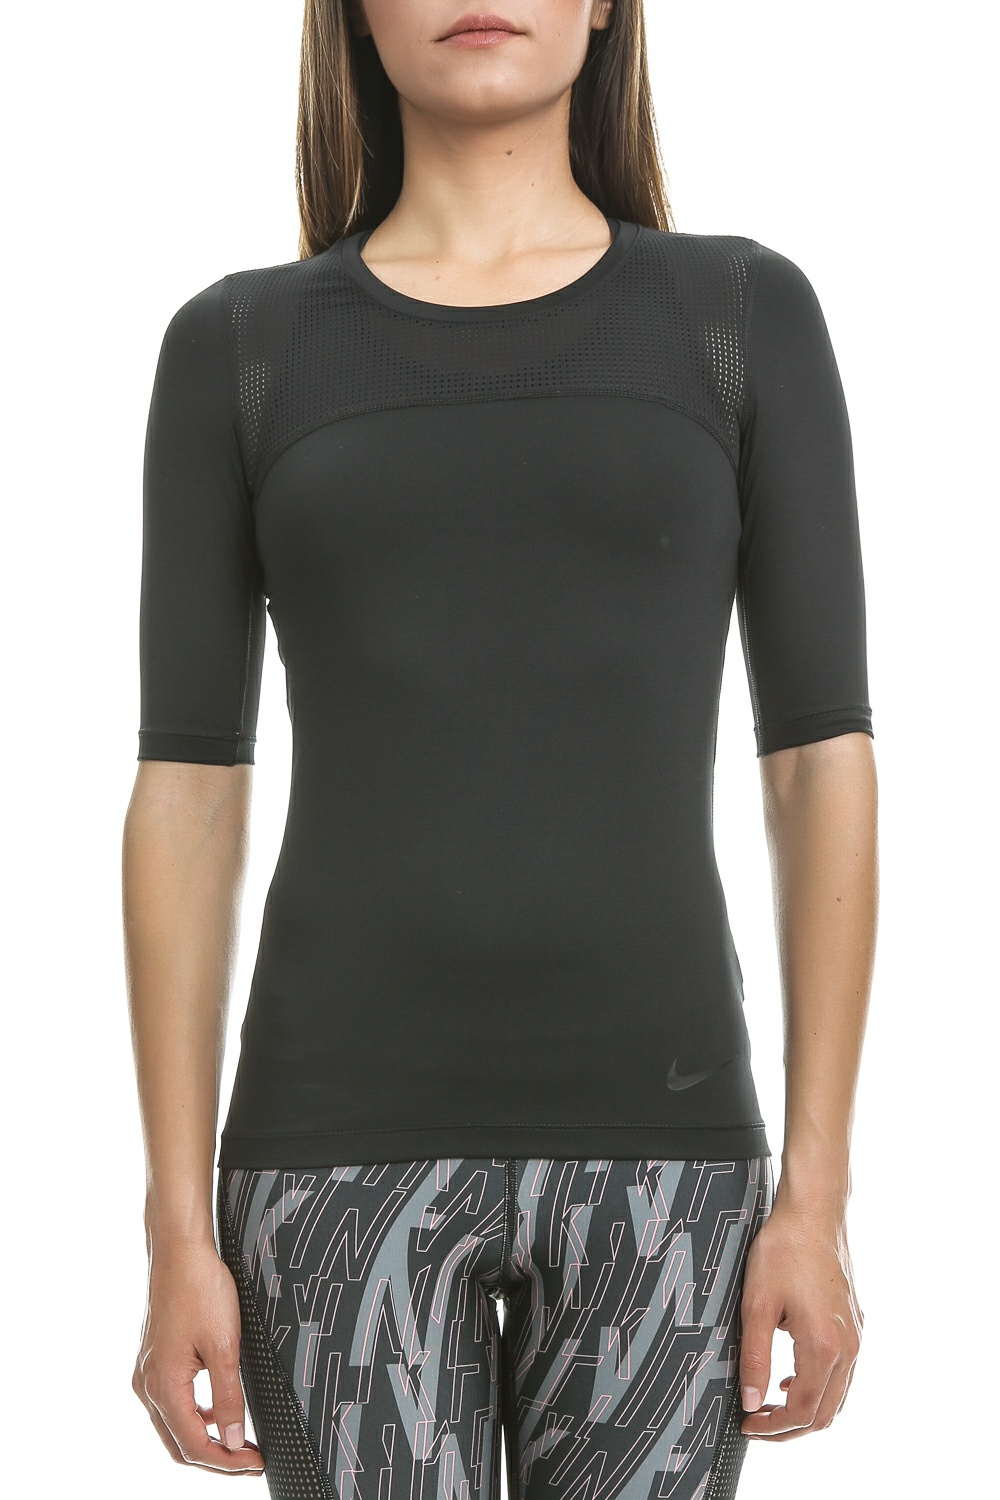 NIKE - Γυναικεία αθλητική κοντομάνικη μπλούζα Nike μαύρη Γυναικεία/Ρούχα/Αθλητικά/T-shirt-Τοπ